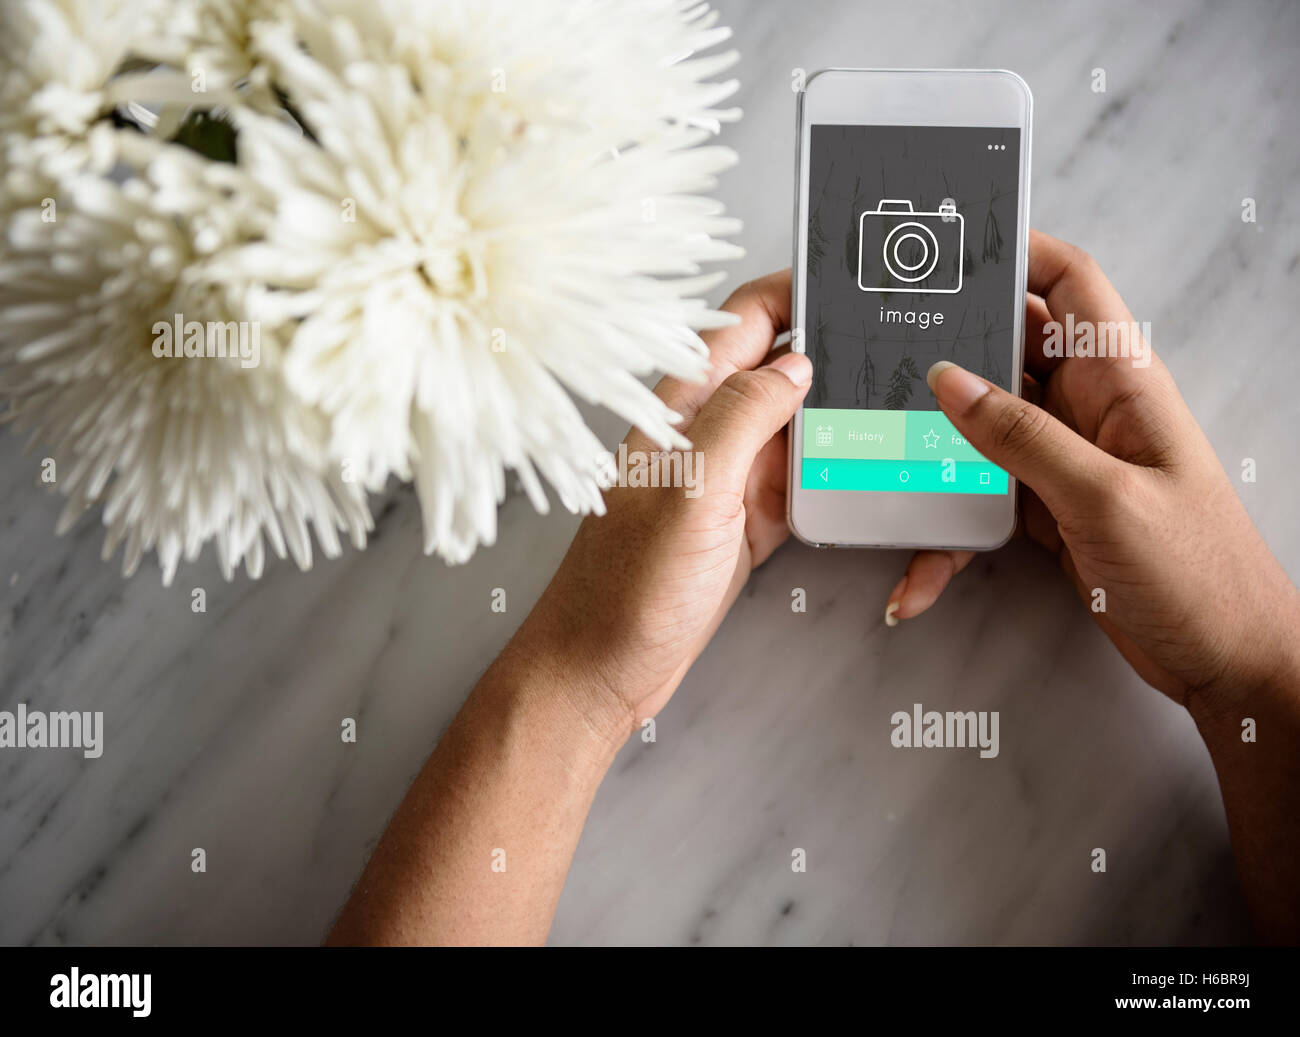 Bildergalerie-Anwendung-Display-Konzept Stockfoto